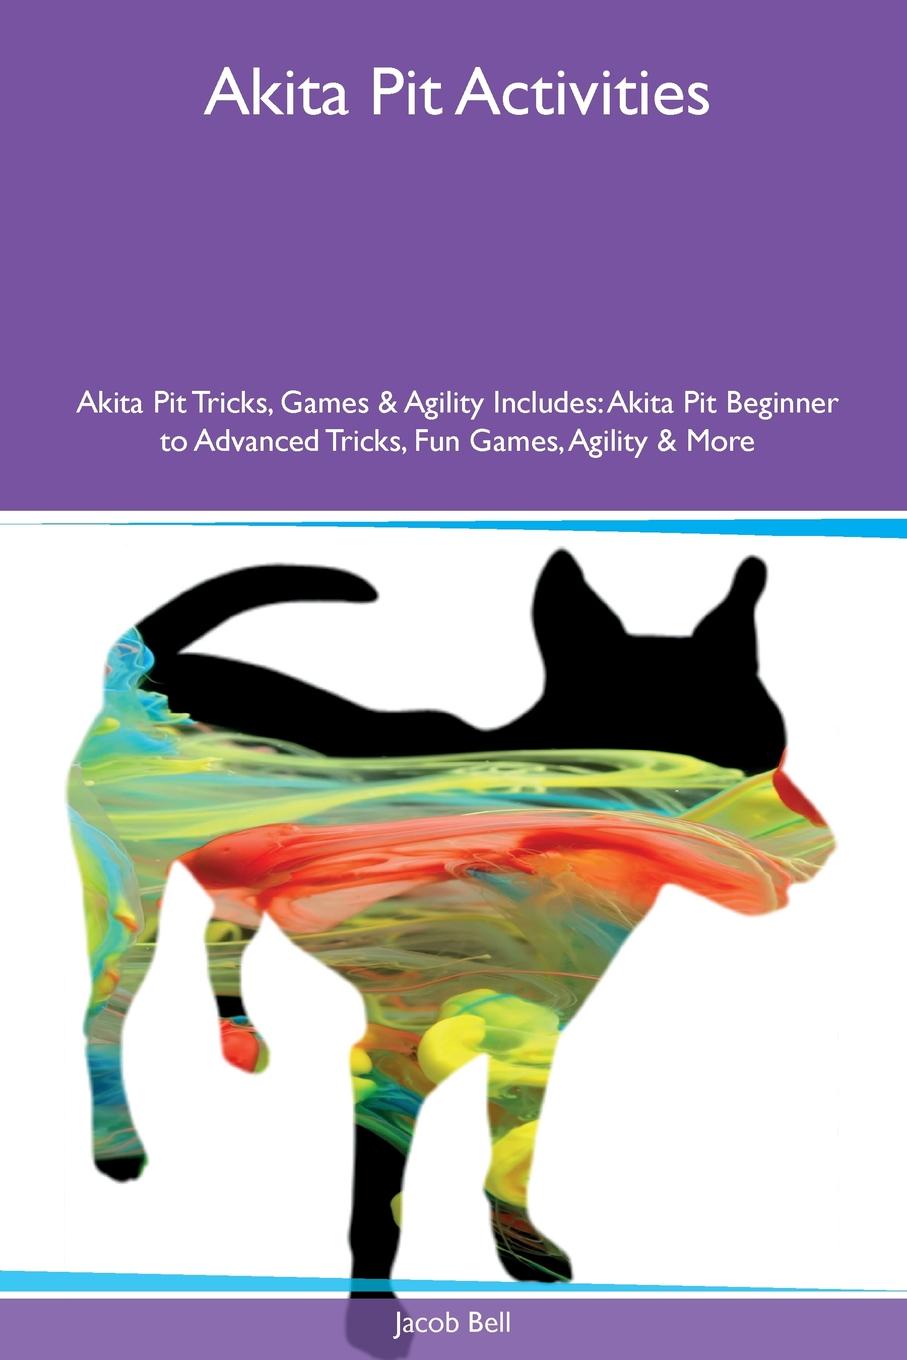 Akita Pit Activities Akita Pit Tricks, Games & Agility Includes. Akita Pit Beginner to Advanced Tricks, Fun Games, Agility & More